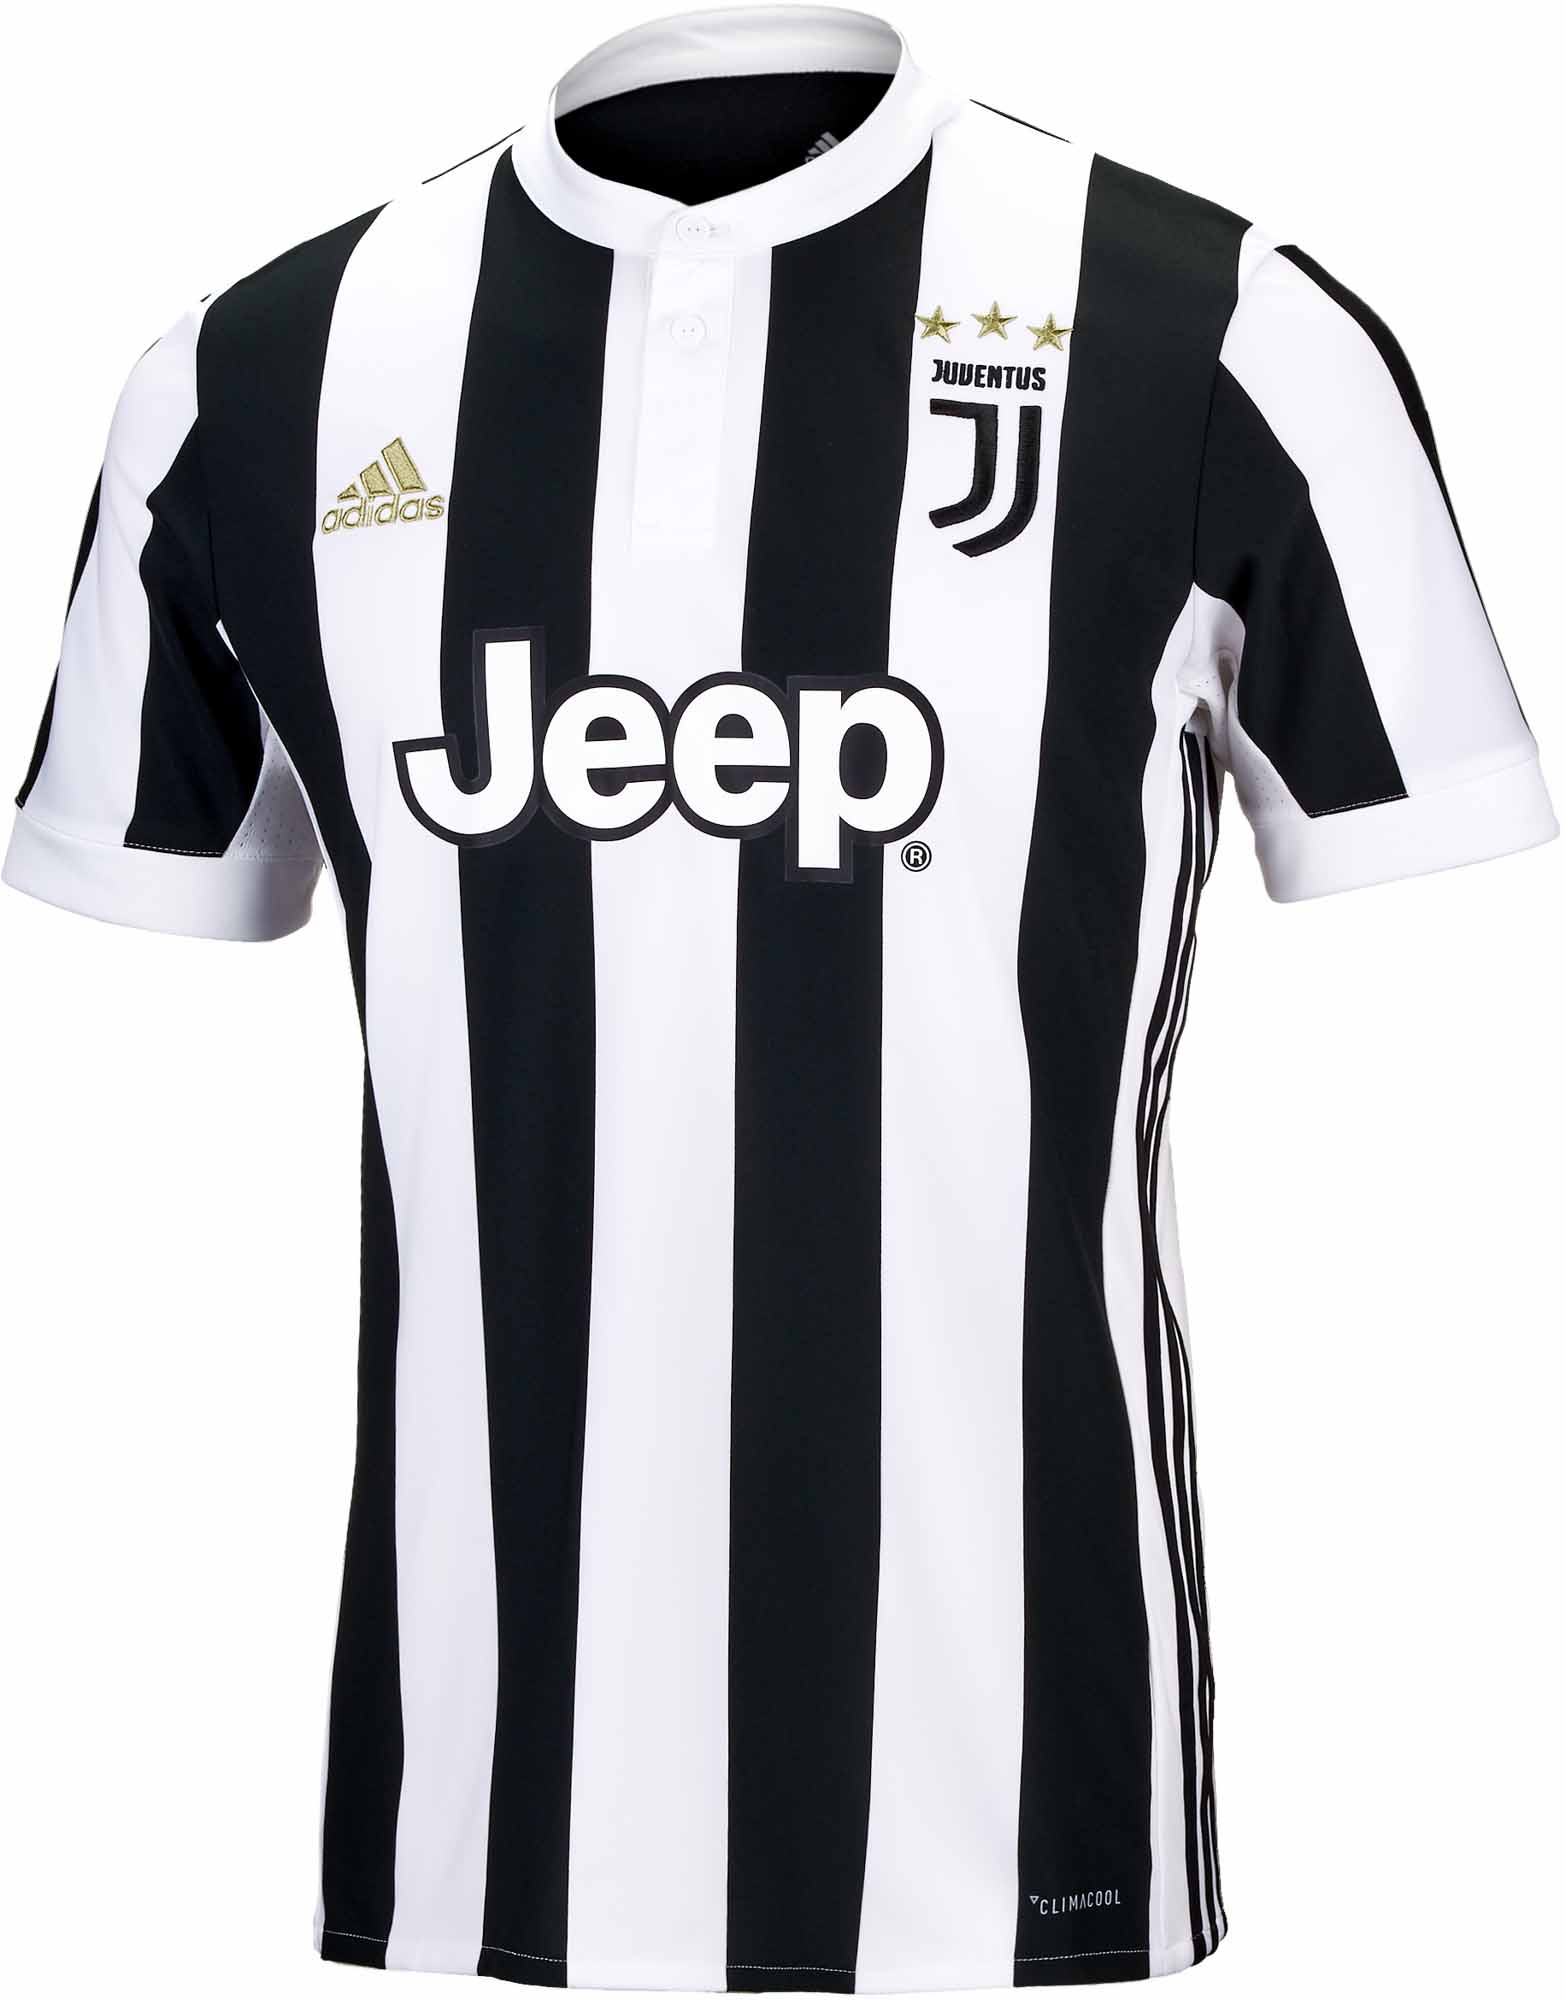 2017/18 adidas Kids Juventus Home Jersey- SoccerPro.com